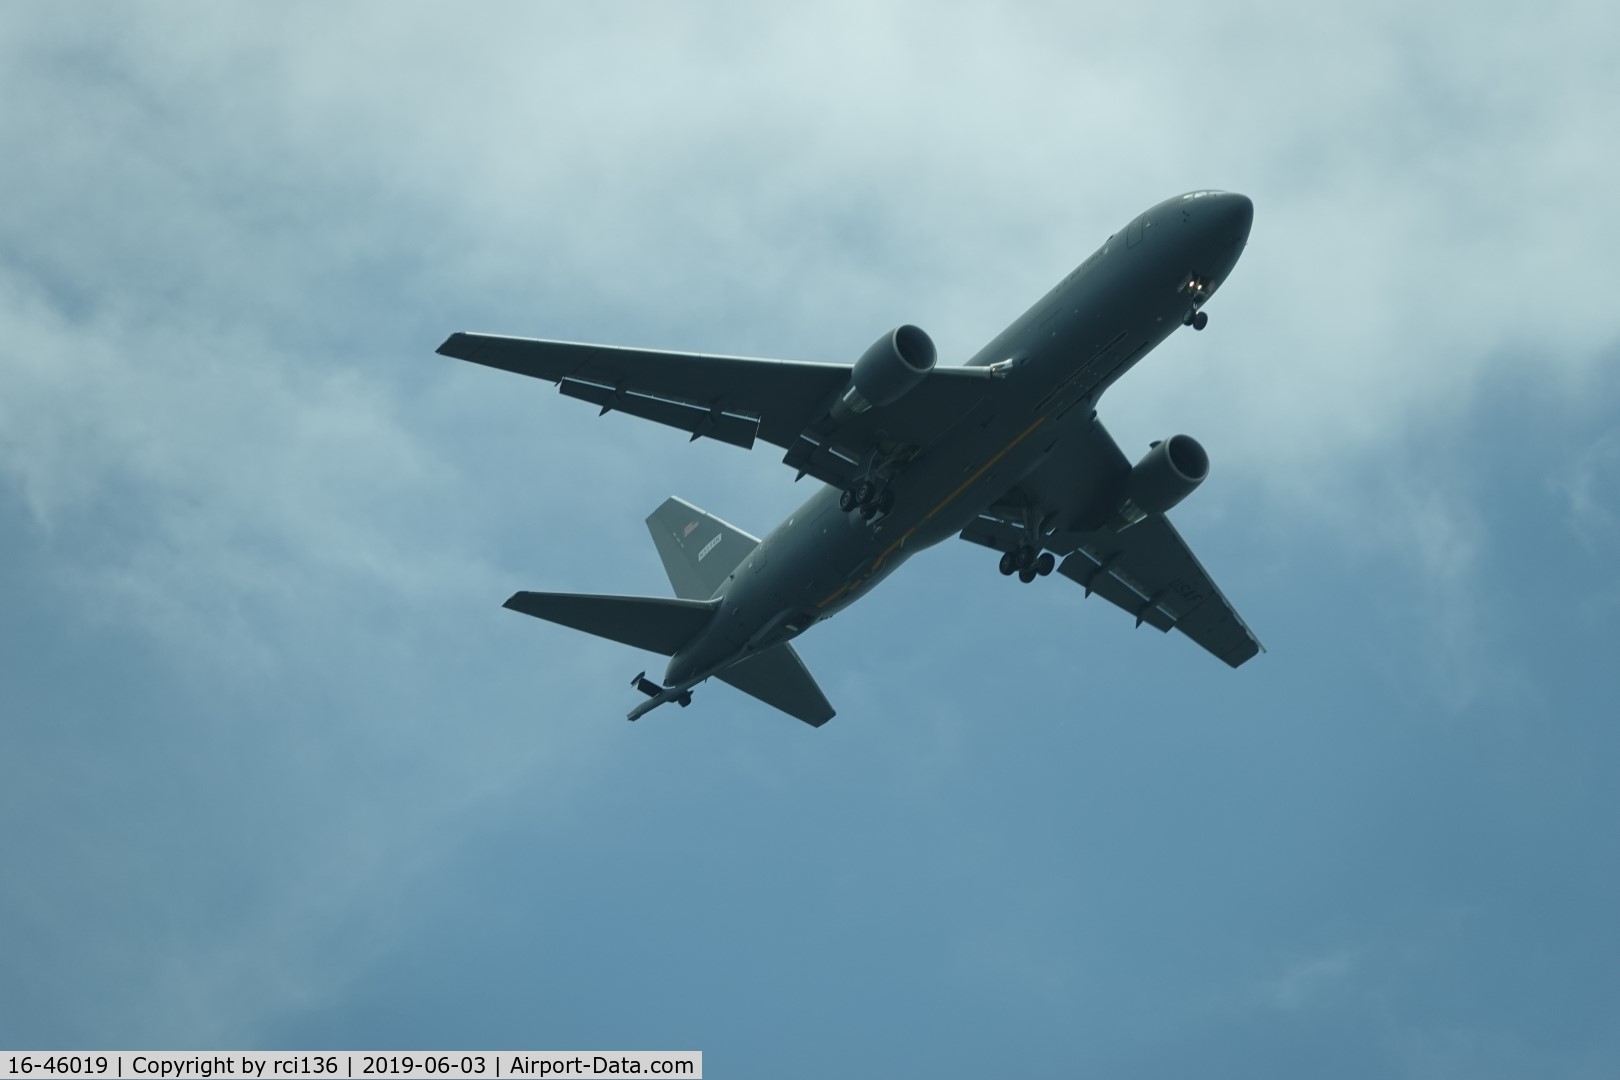 16-46019, 2016 Boeing KC-46A Pegasus (767-2LKC) C/N 34138, On approach to Paine Field, Everett Wa.
N5514K